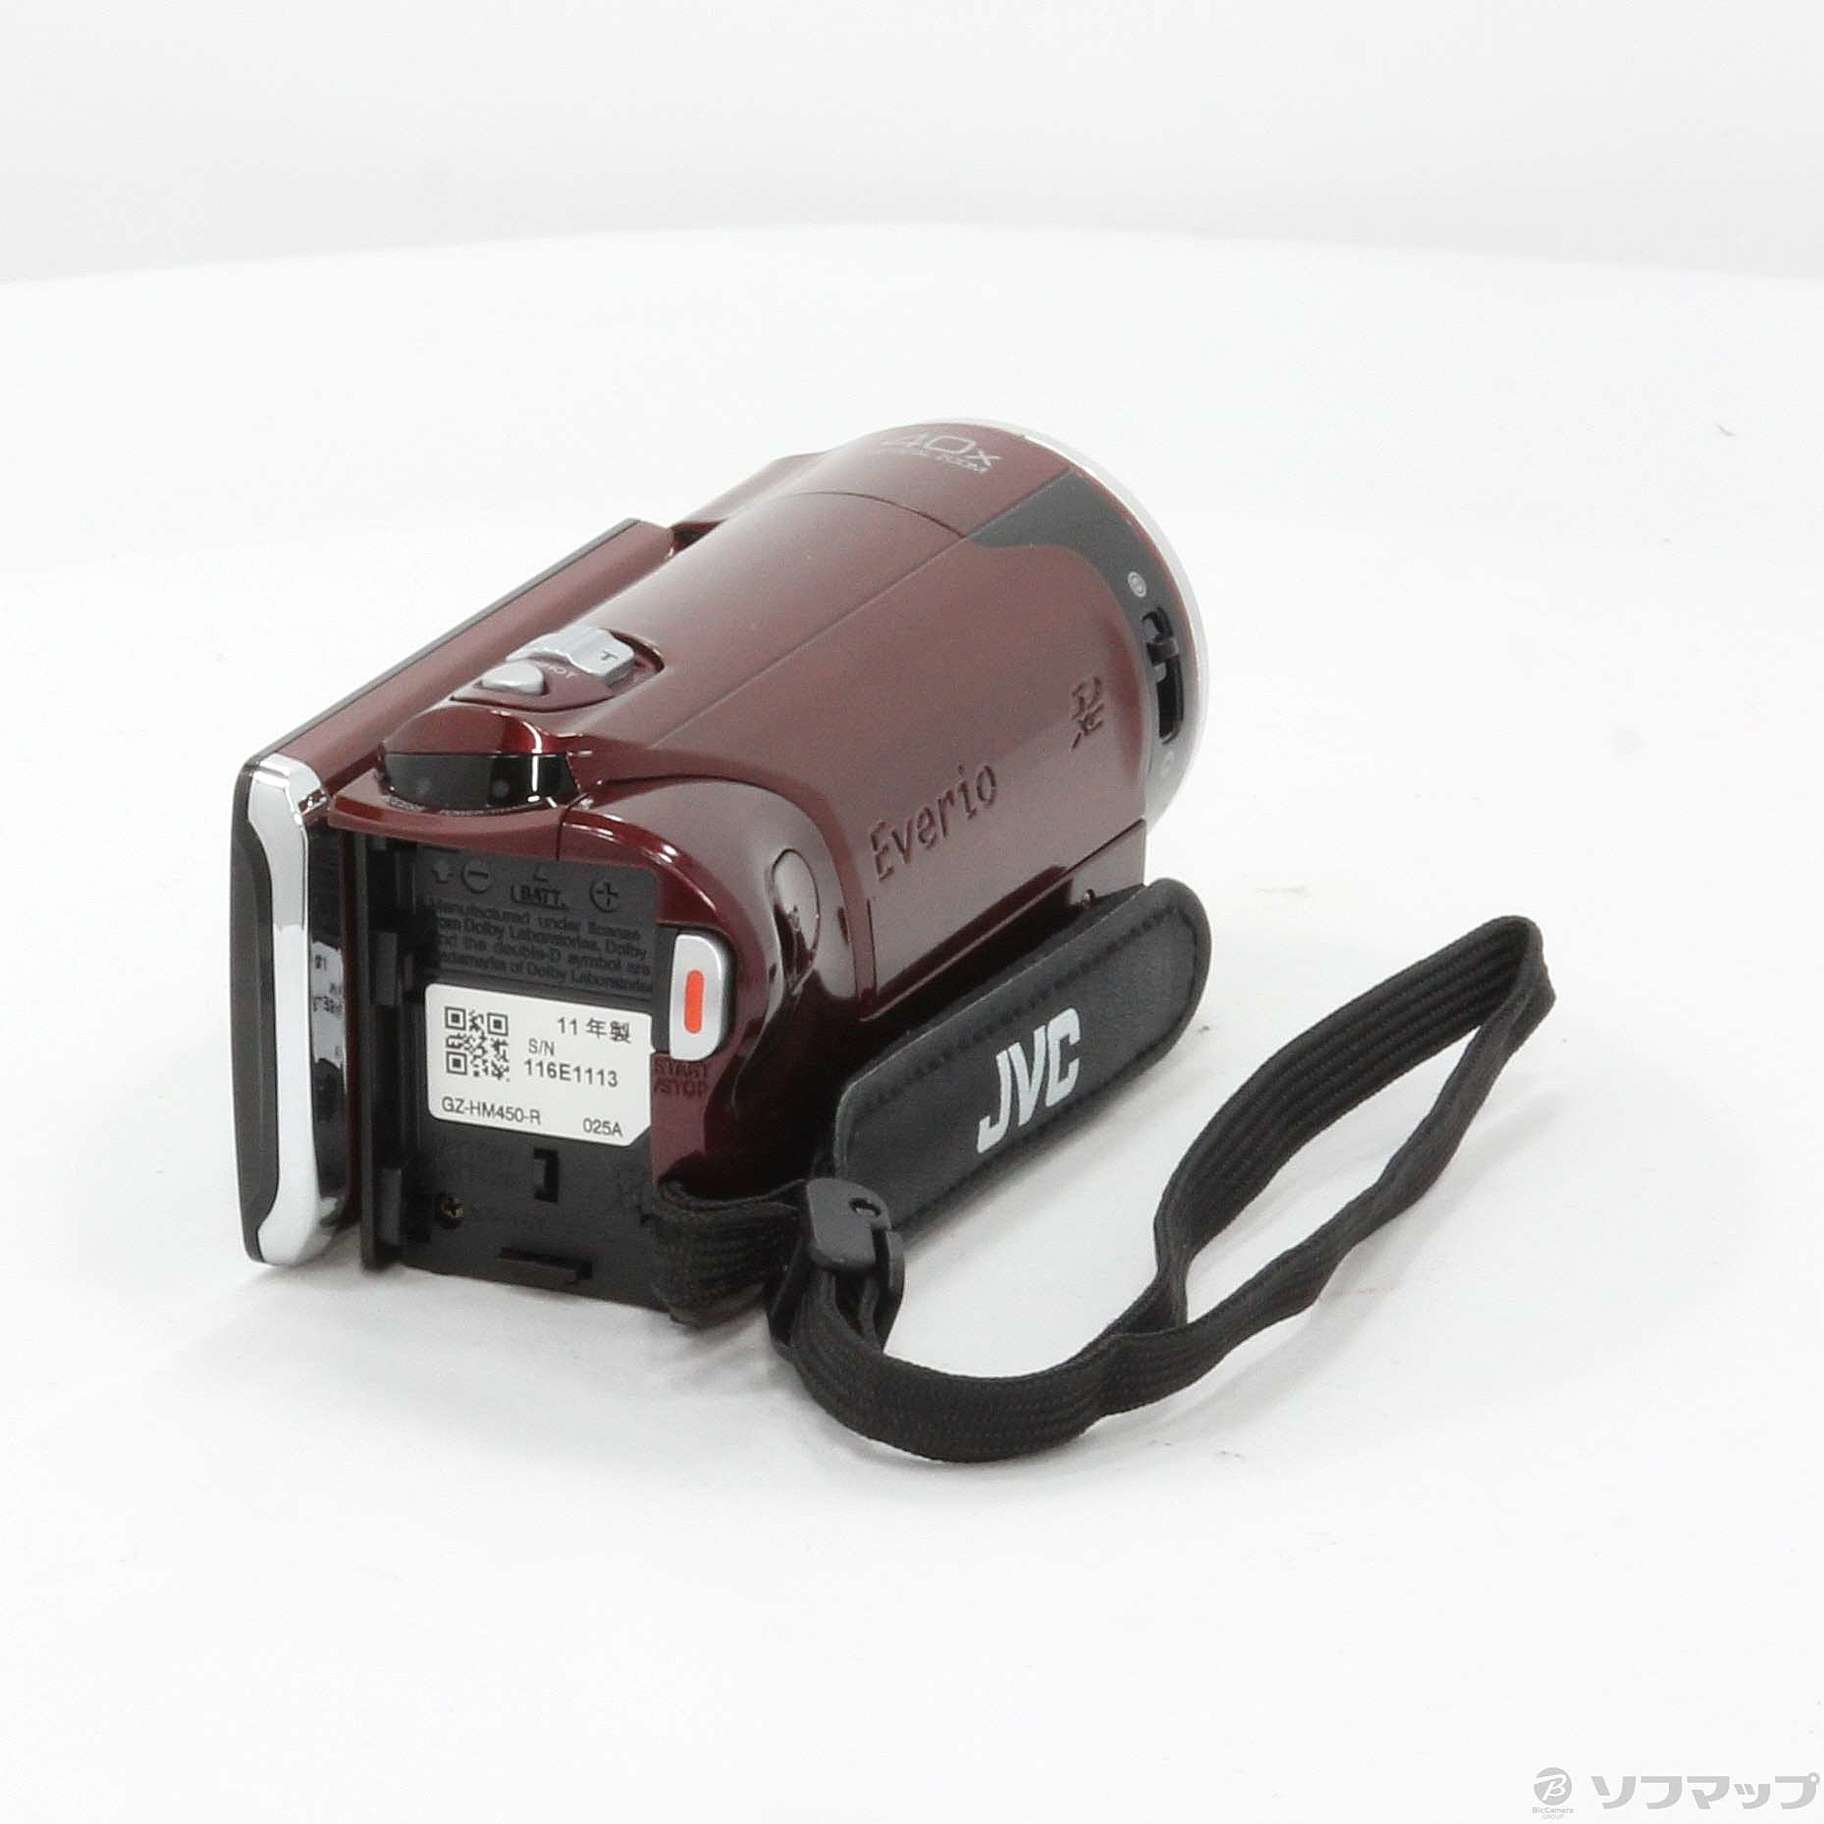 Victor JVC GZ-HM450 レッド ビデオカメラ